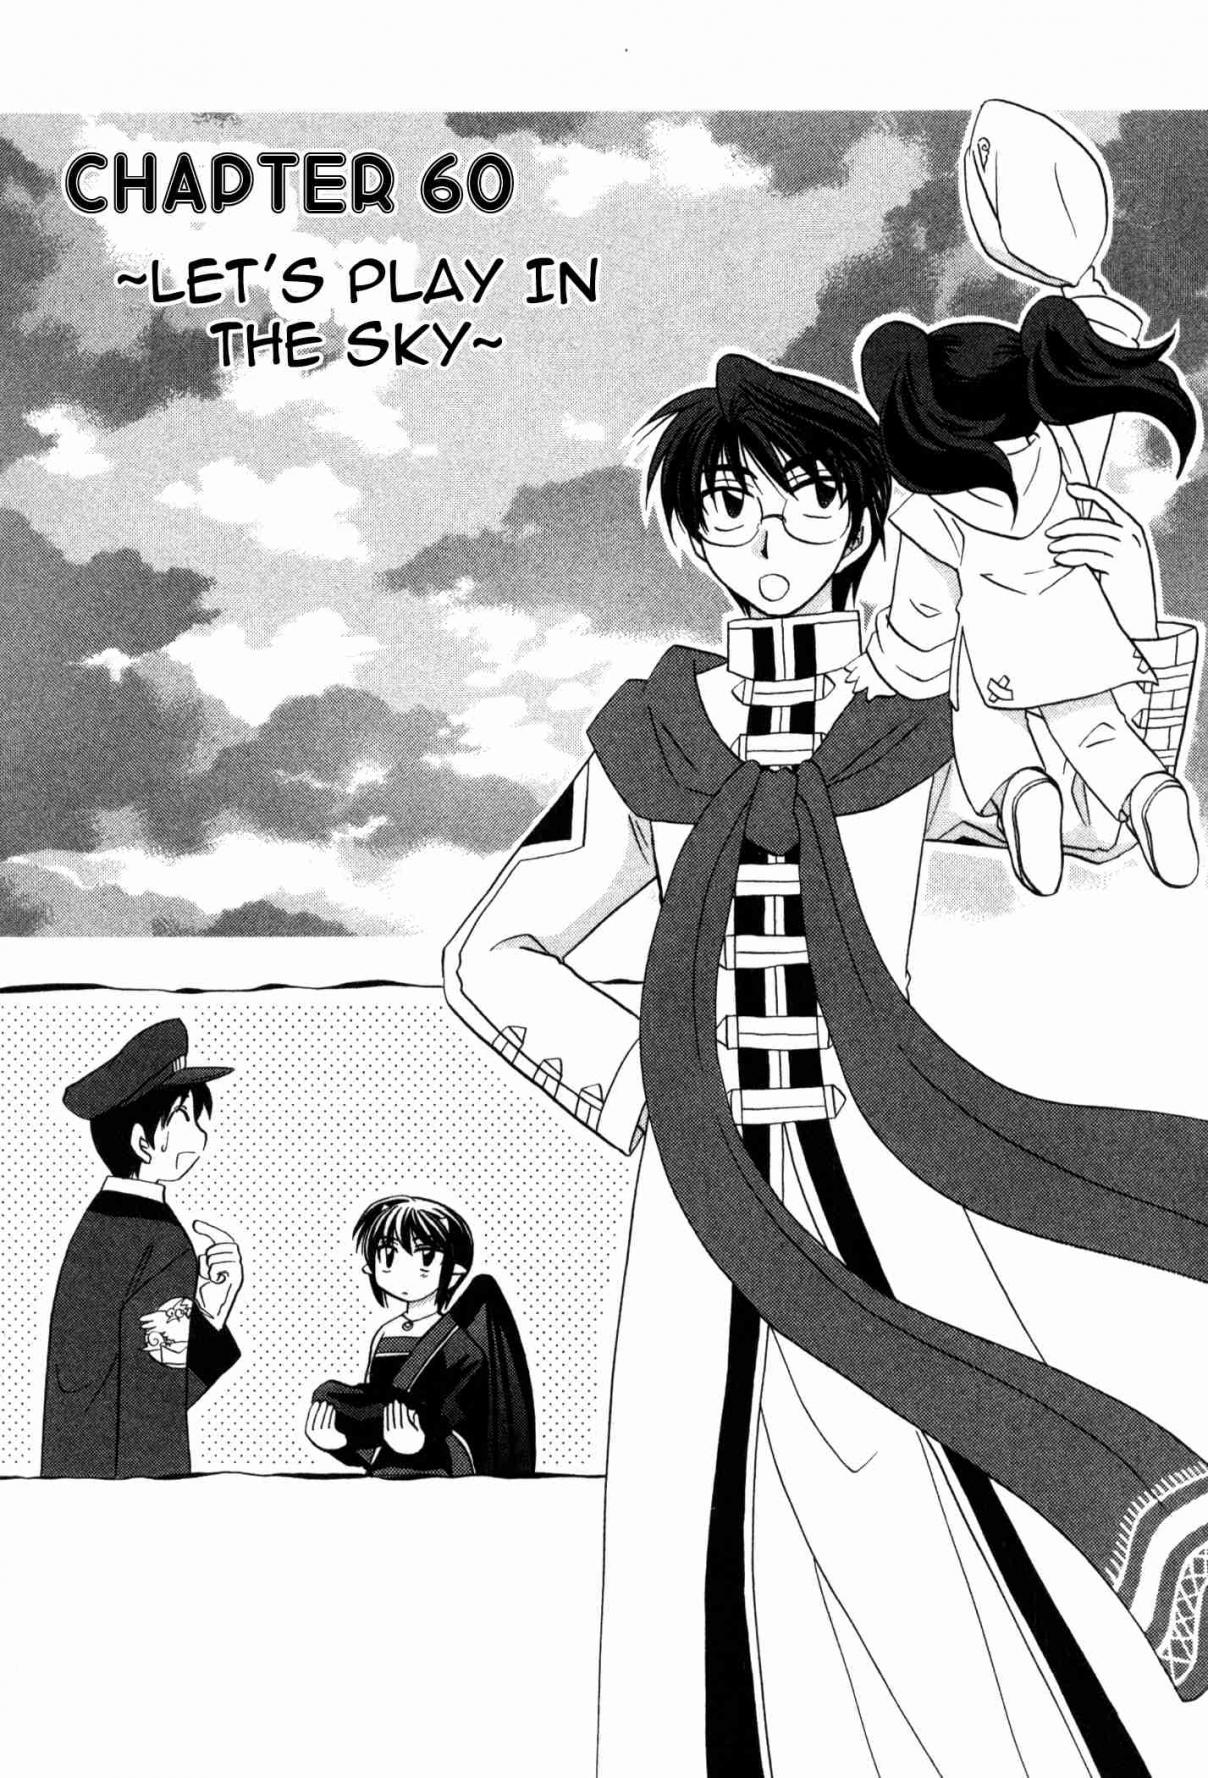 Corseltel no Ryuujitsushi Monogatari Vol. 8 Ch. 60 Let's Play in the Sky